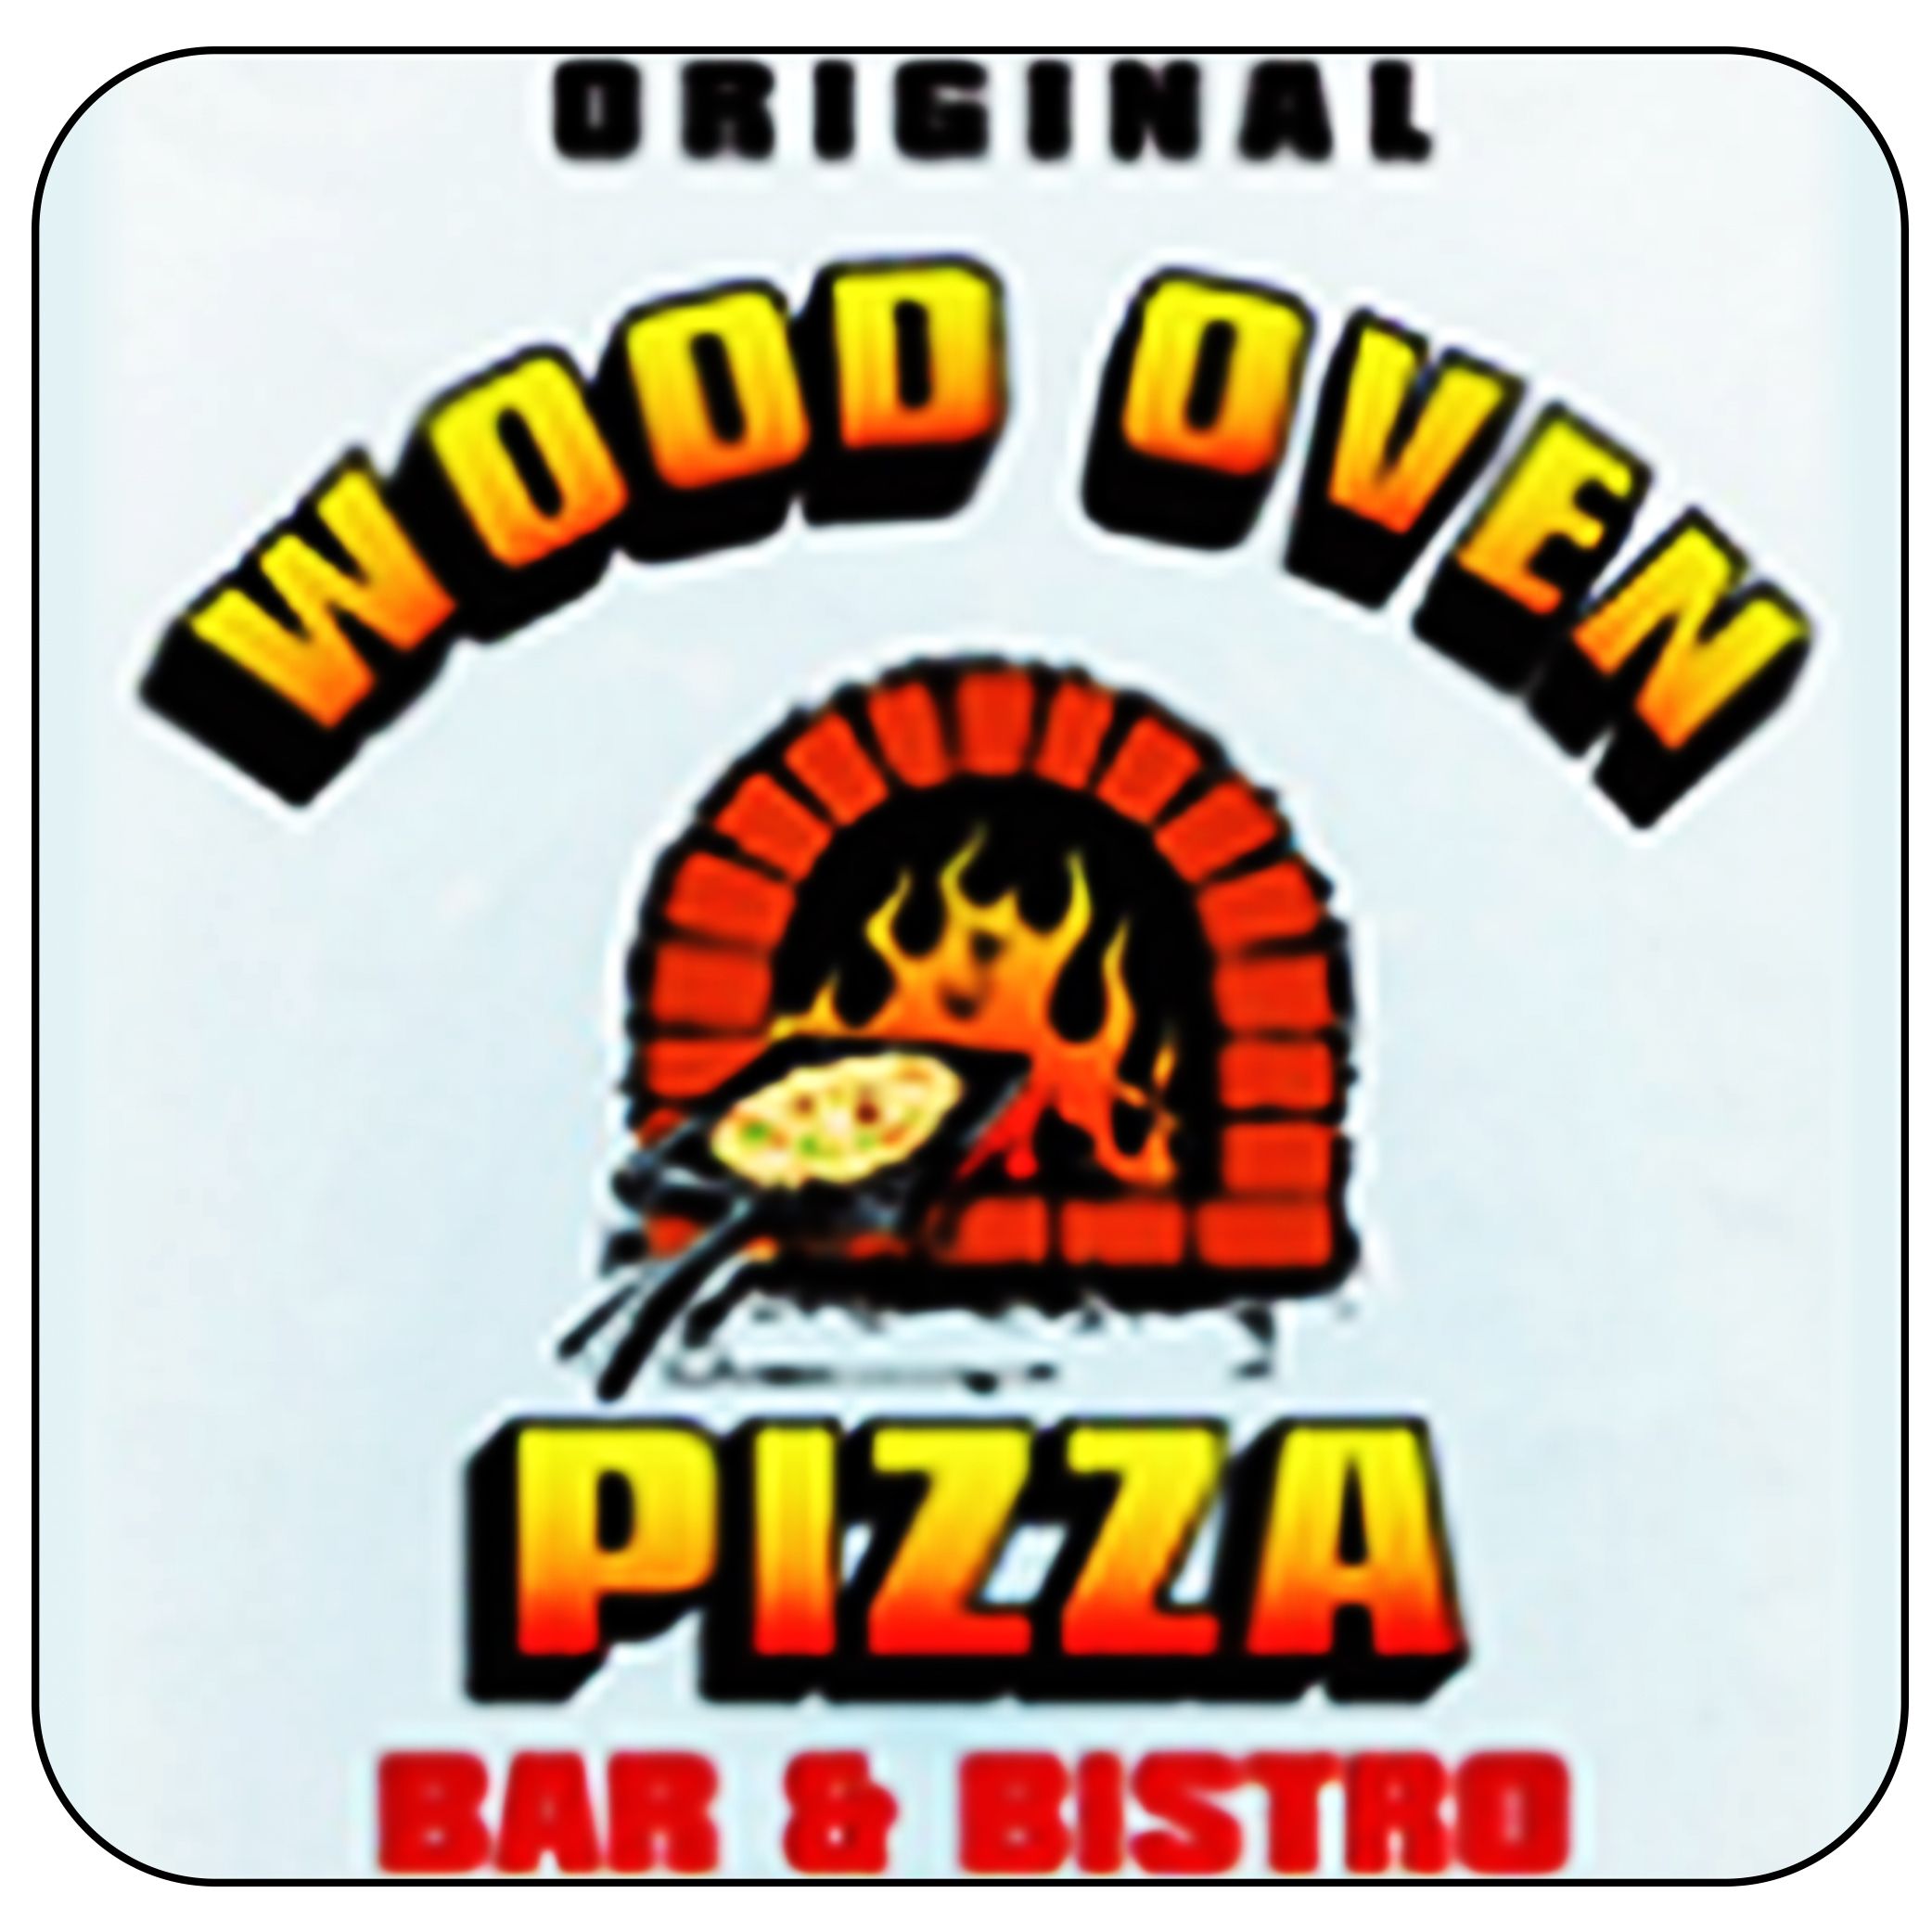 Original Wood Oven Pizza Geelong | restaurant | 56 Mercer St, Geelong VIC 3220, Australia | 0352299945 OR +61 3 5229 9945